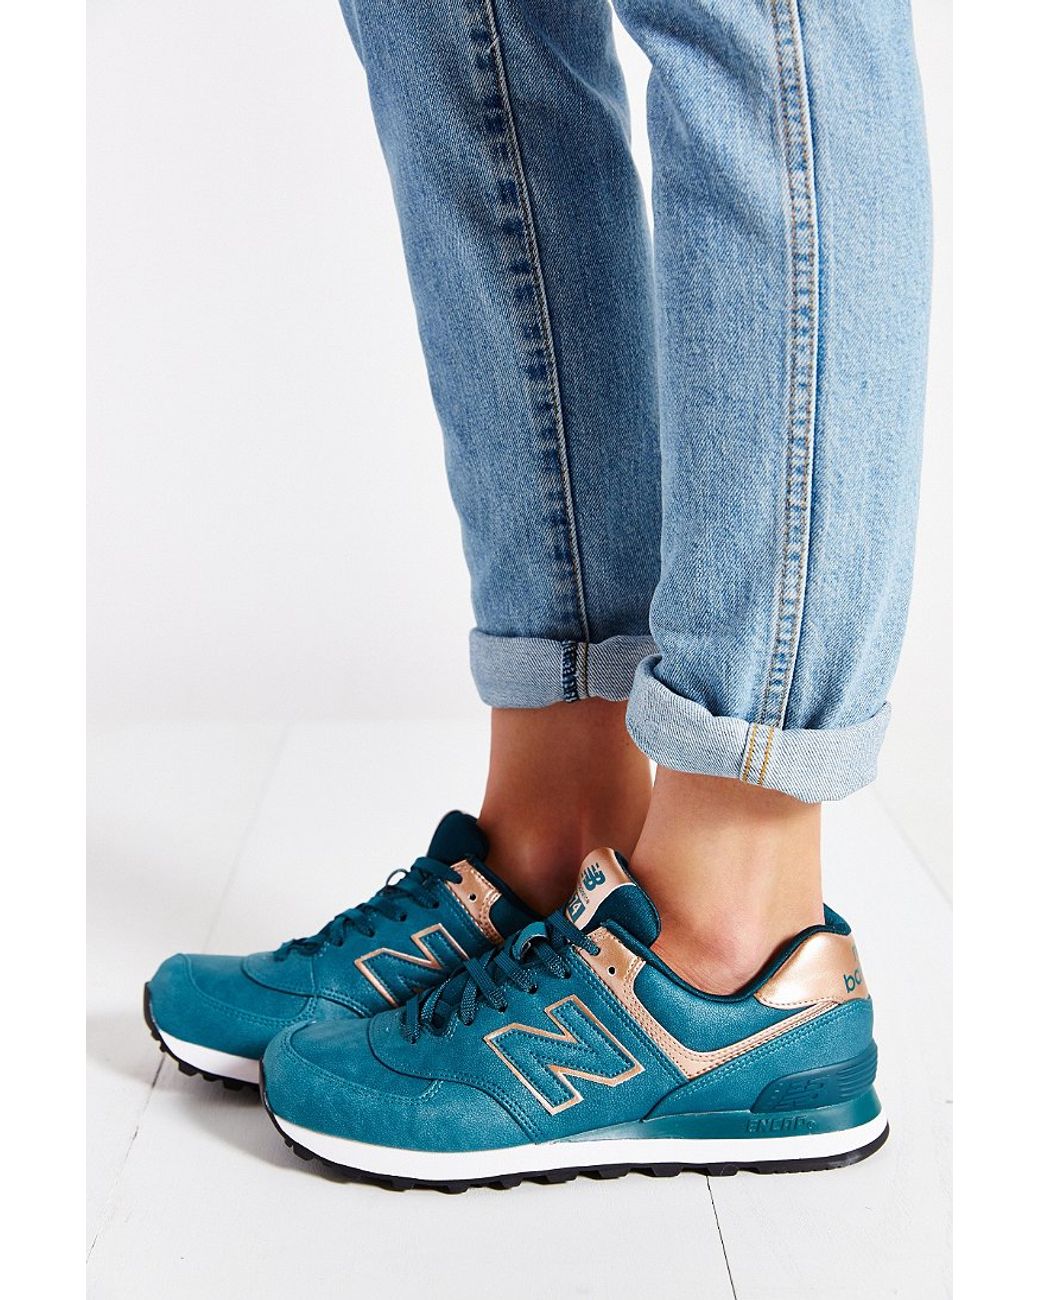 New Balance 574 Precious Metals Running Sneaker in Blue | Lyst